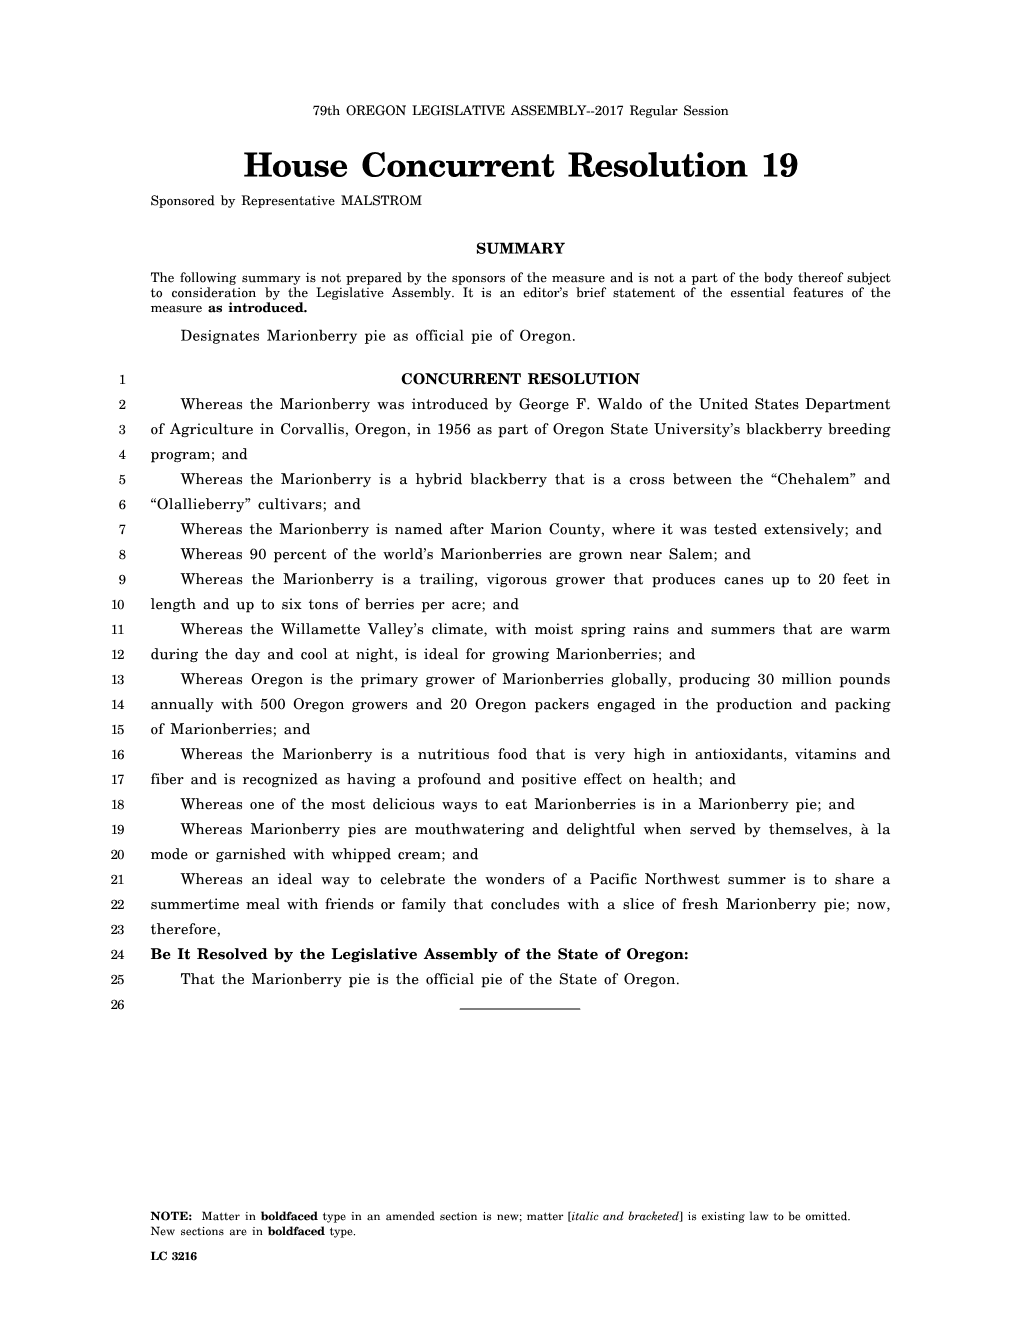 House Concurrent Resolution 19 Sponsored by Representative MALSTROM